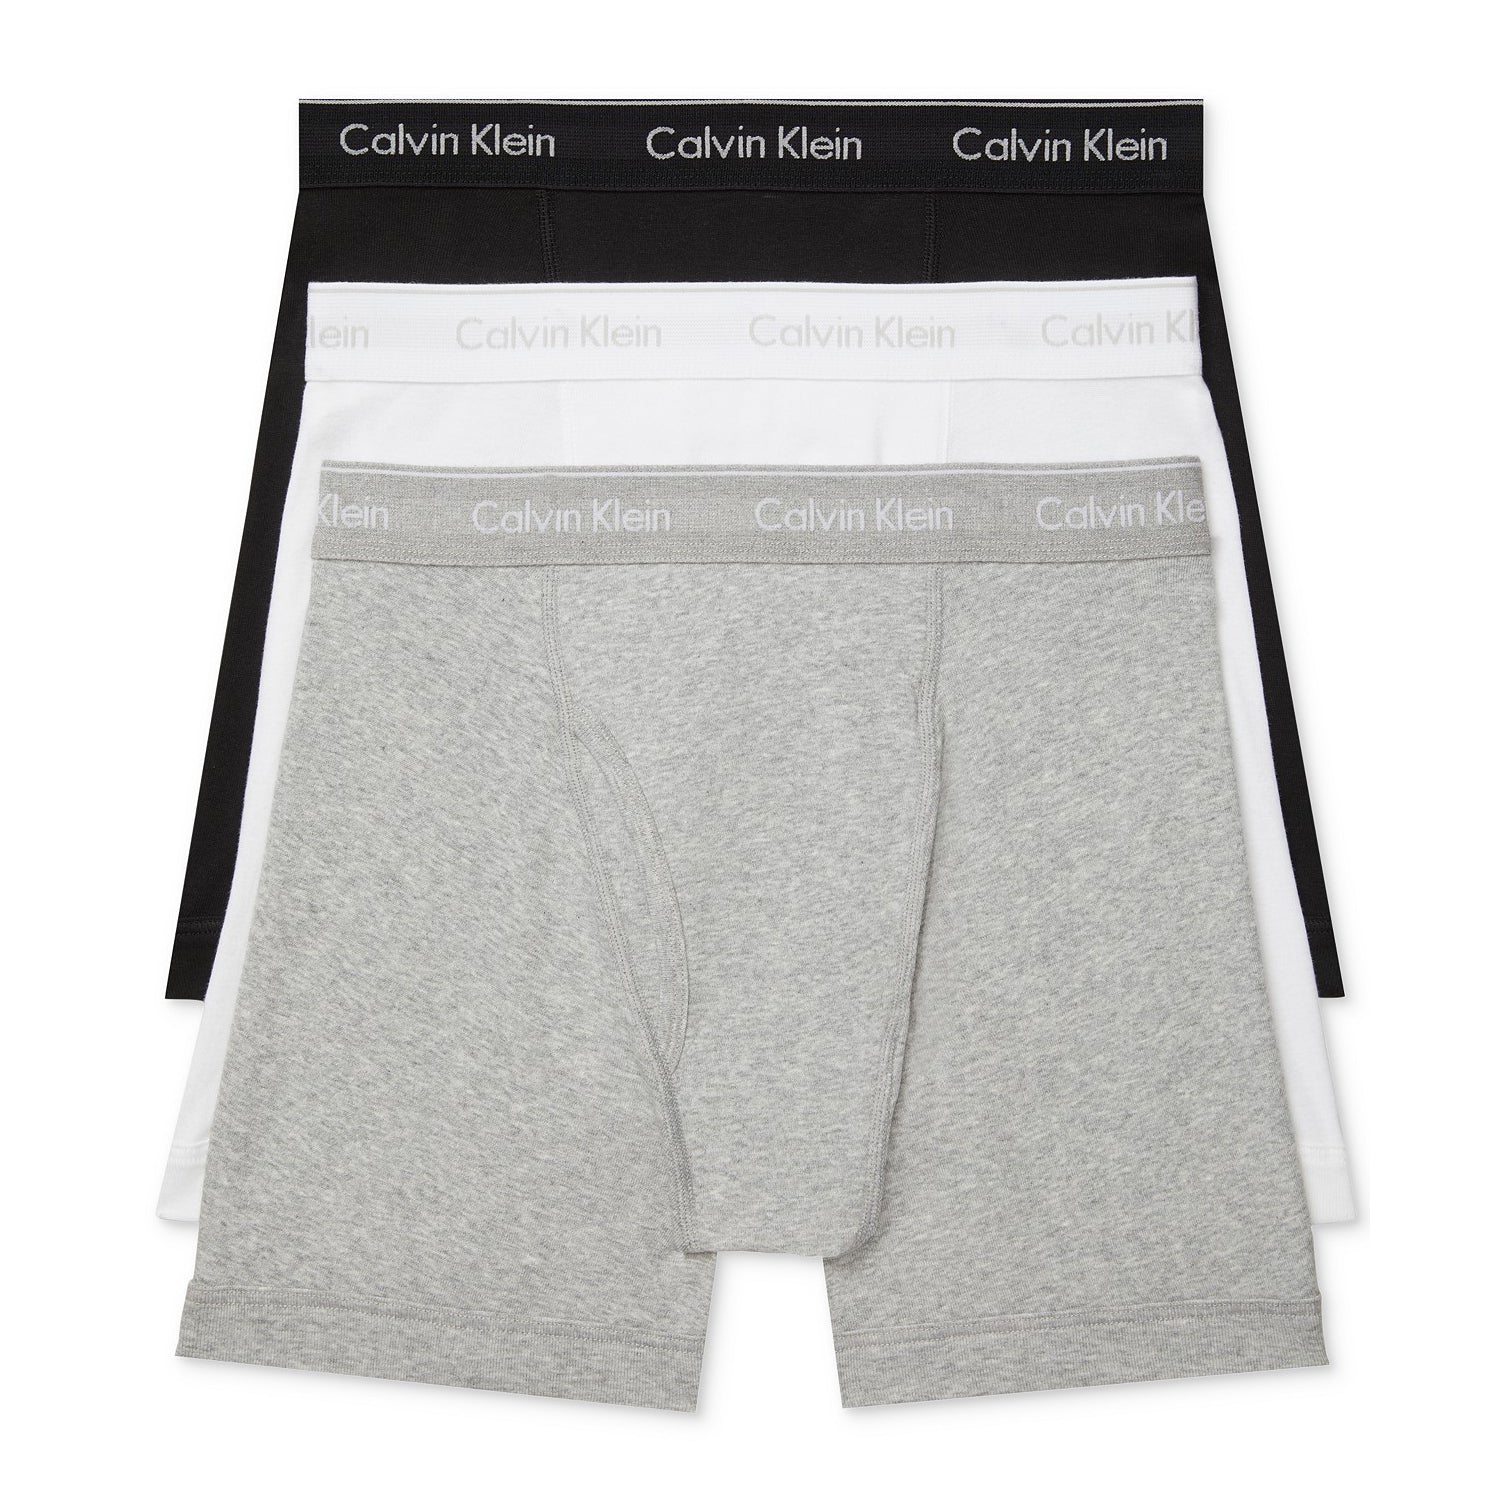 Calvin Klein Cotton Classics Brief 4 Pack In Grey/White